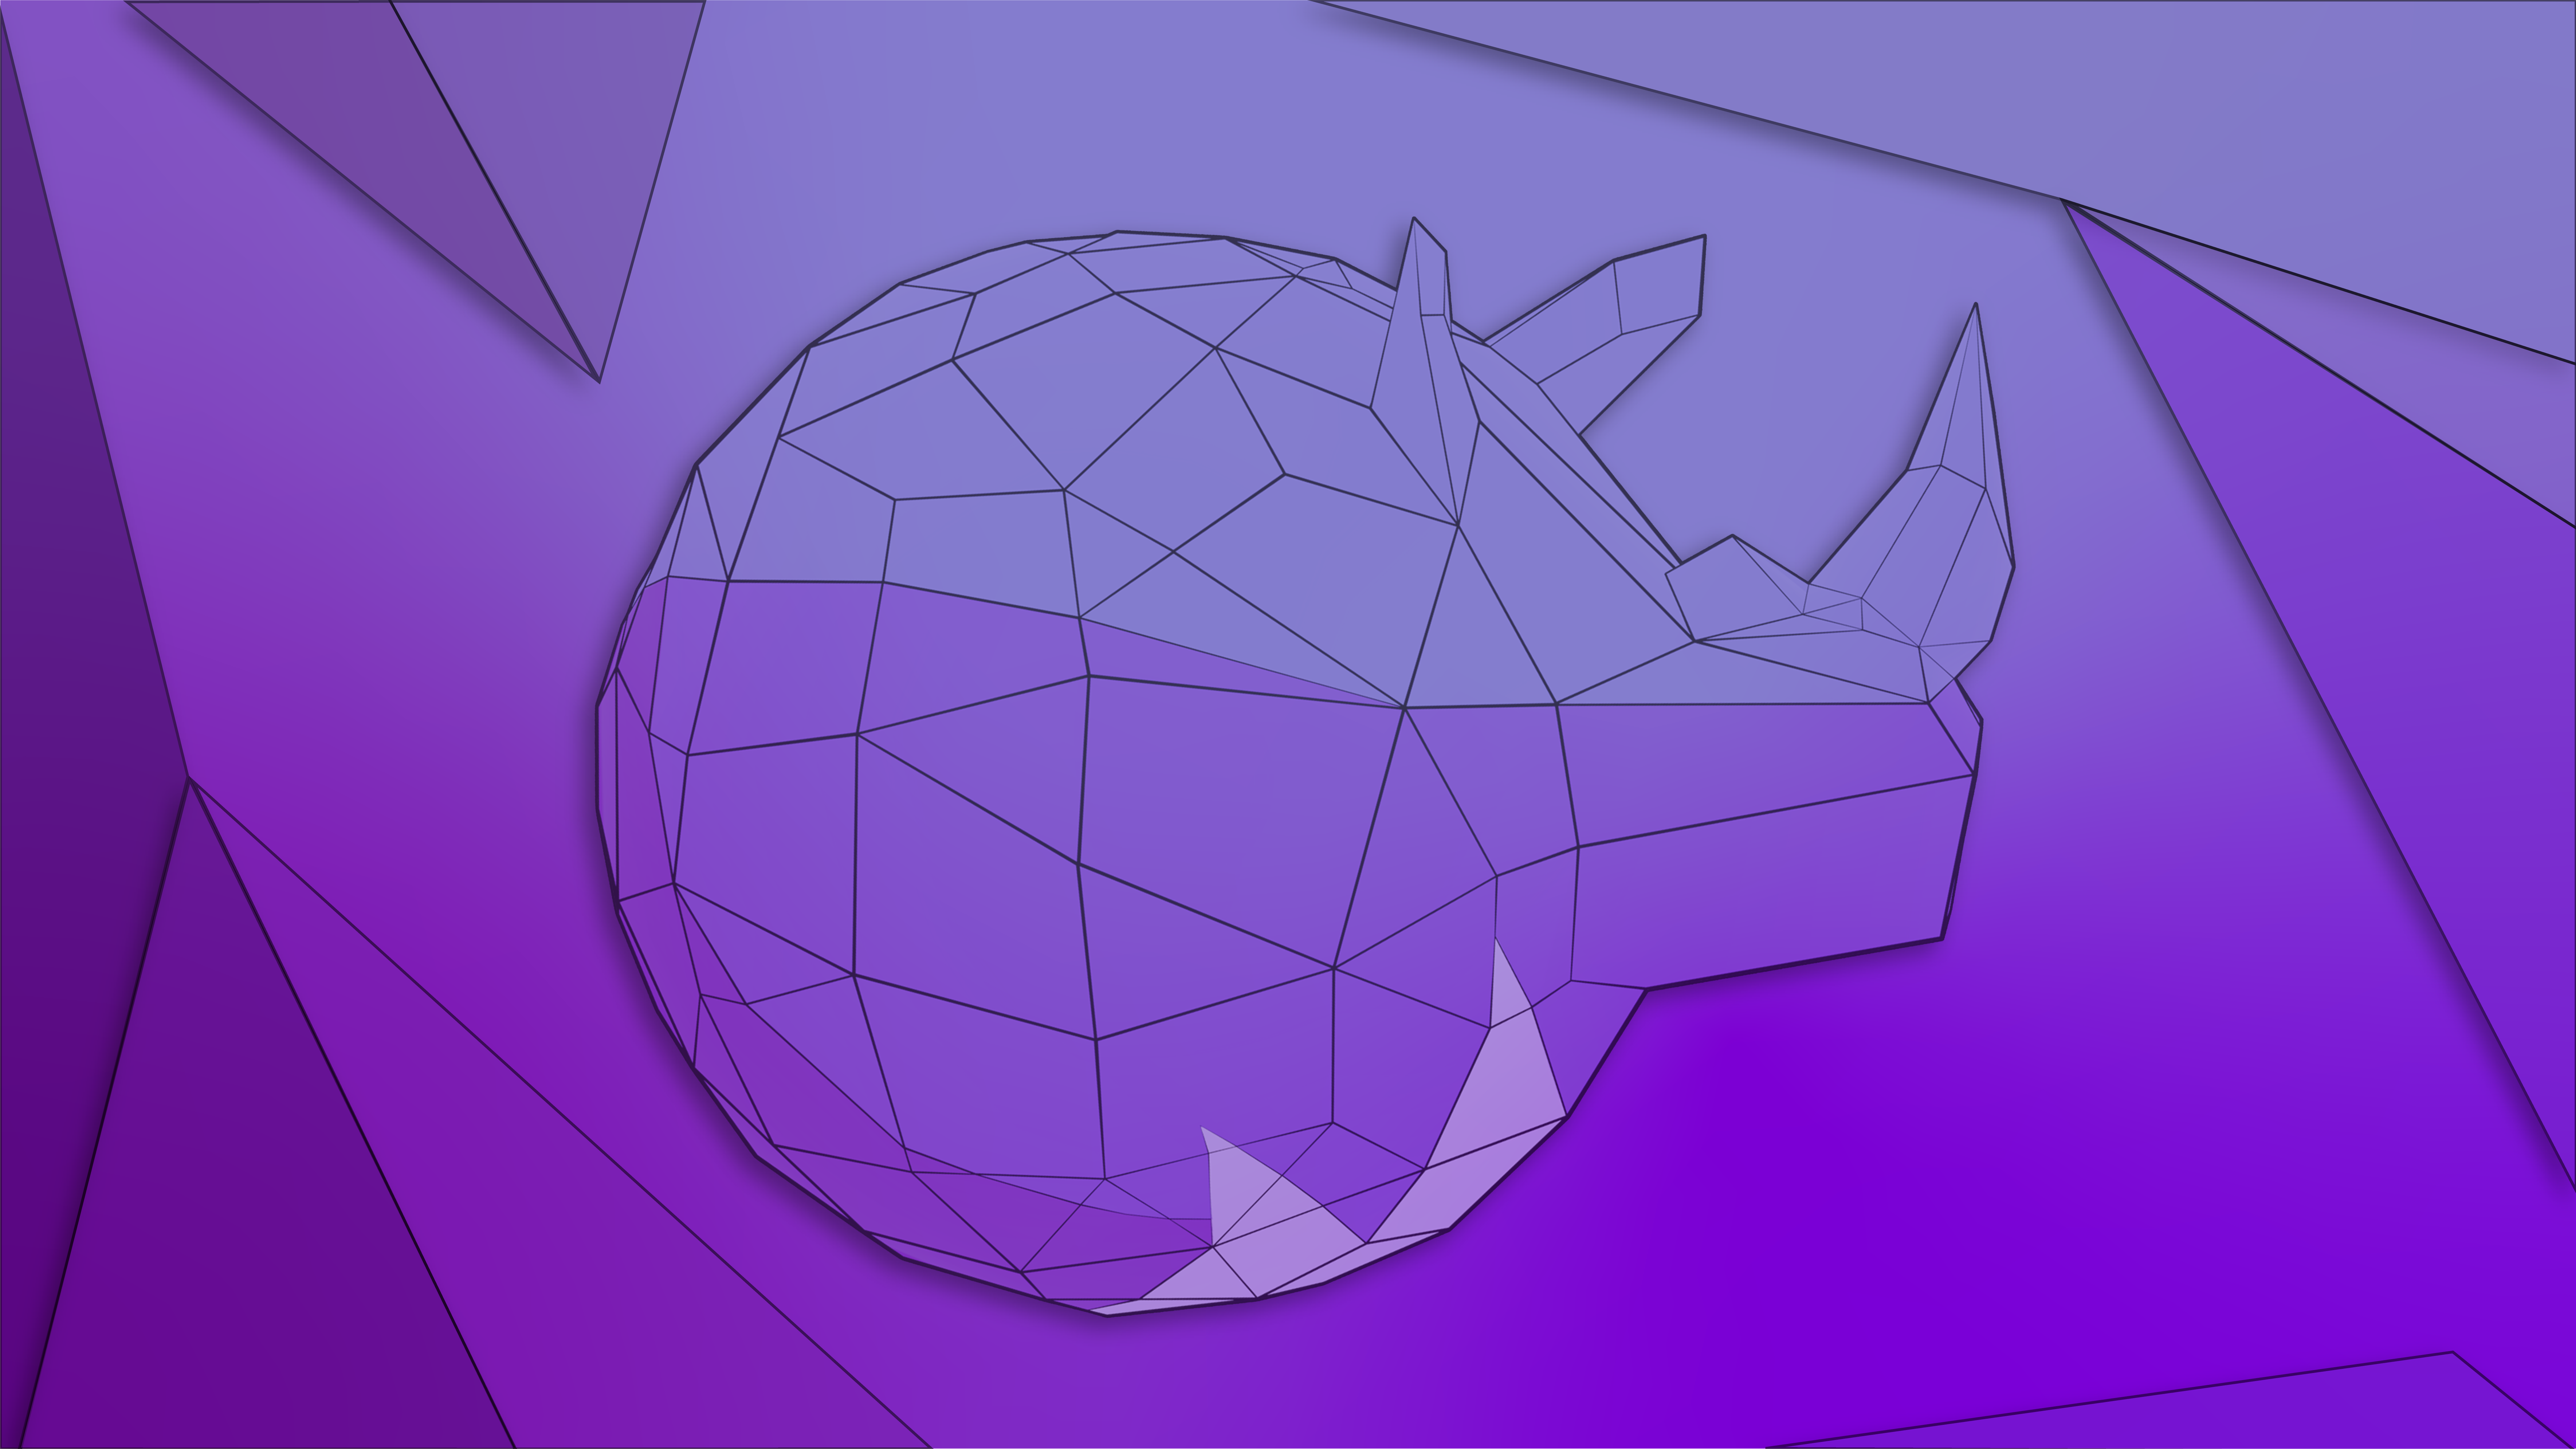 General 8000x4500 Linux Rhino Linux purple rhino polygon art geometry logo operating system animals minimalism simple background